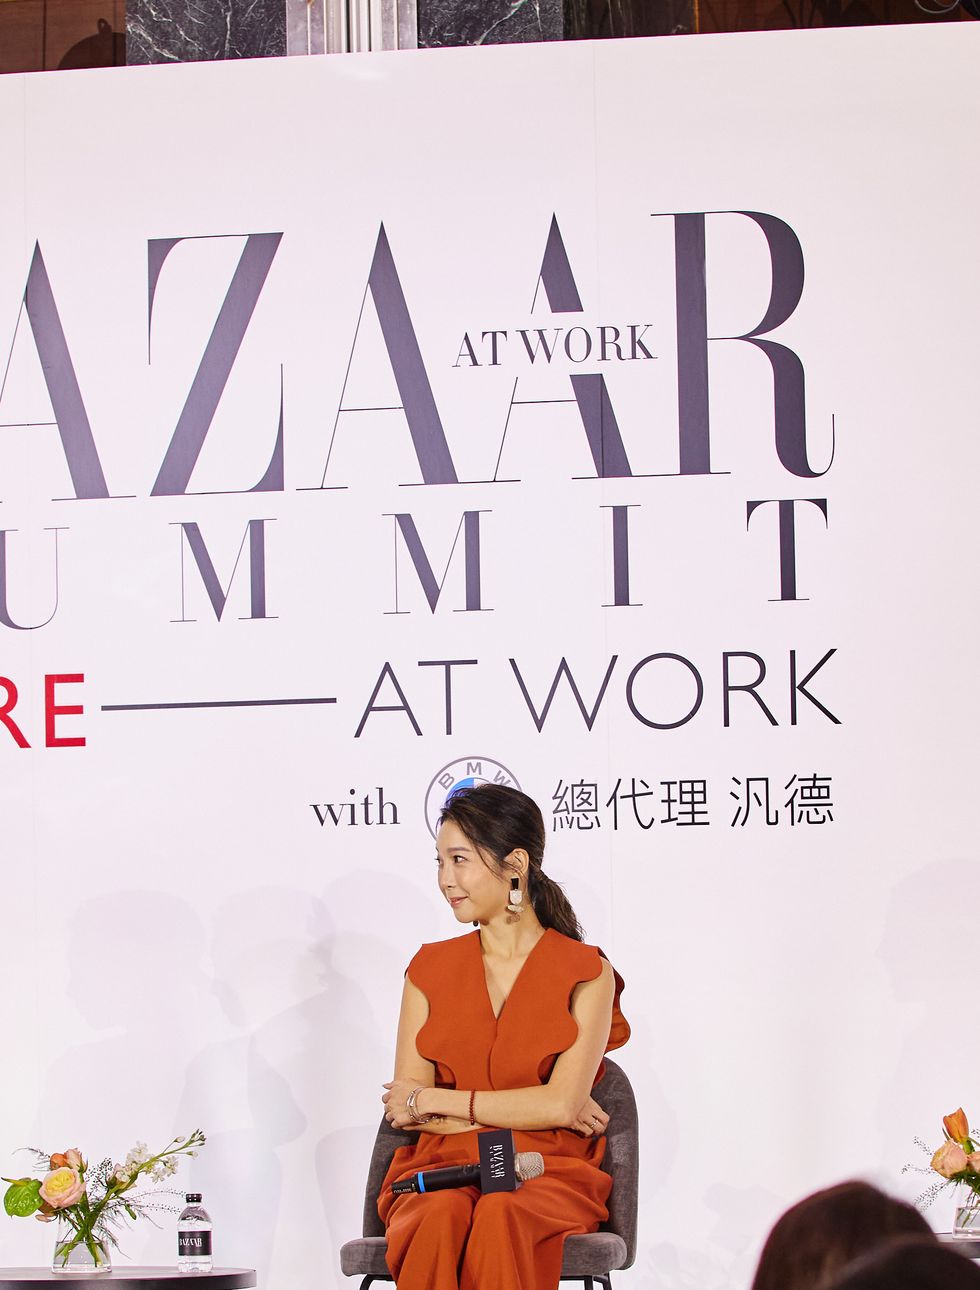 【bazaar at work summit】cama cafe許建珠、宏國建設林鈺芳的職場管理心法